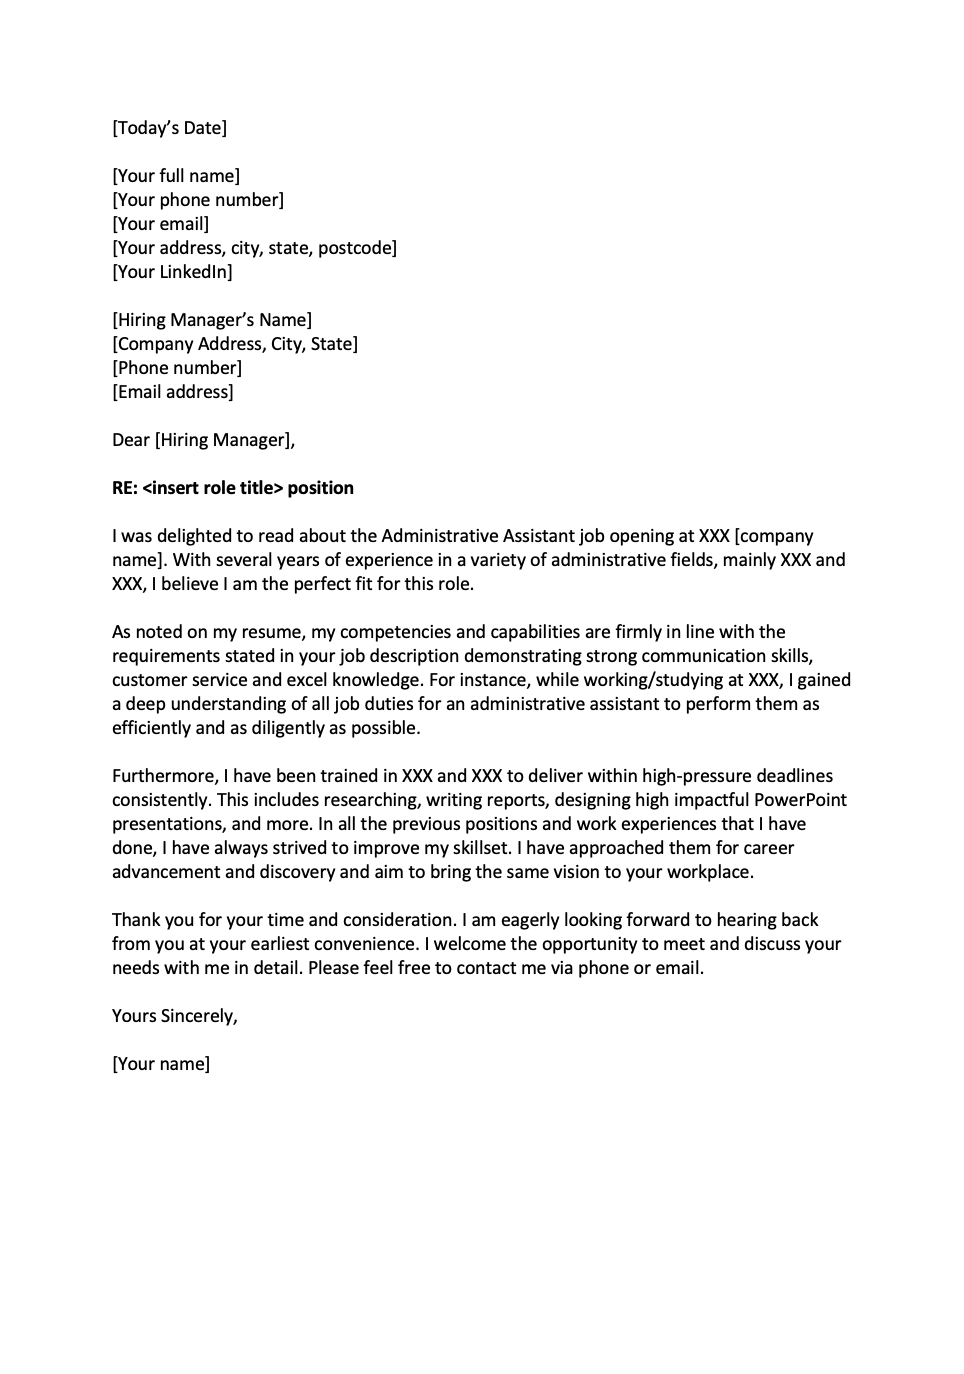 legal admin cover letter